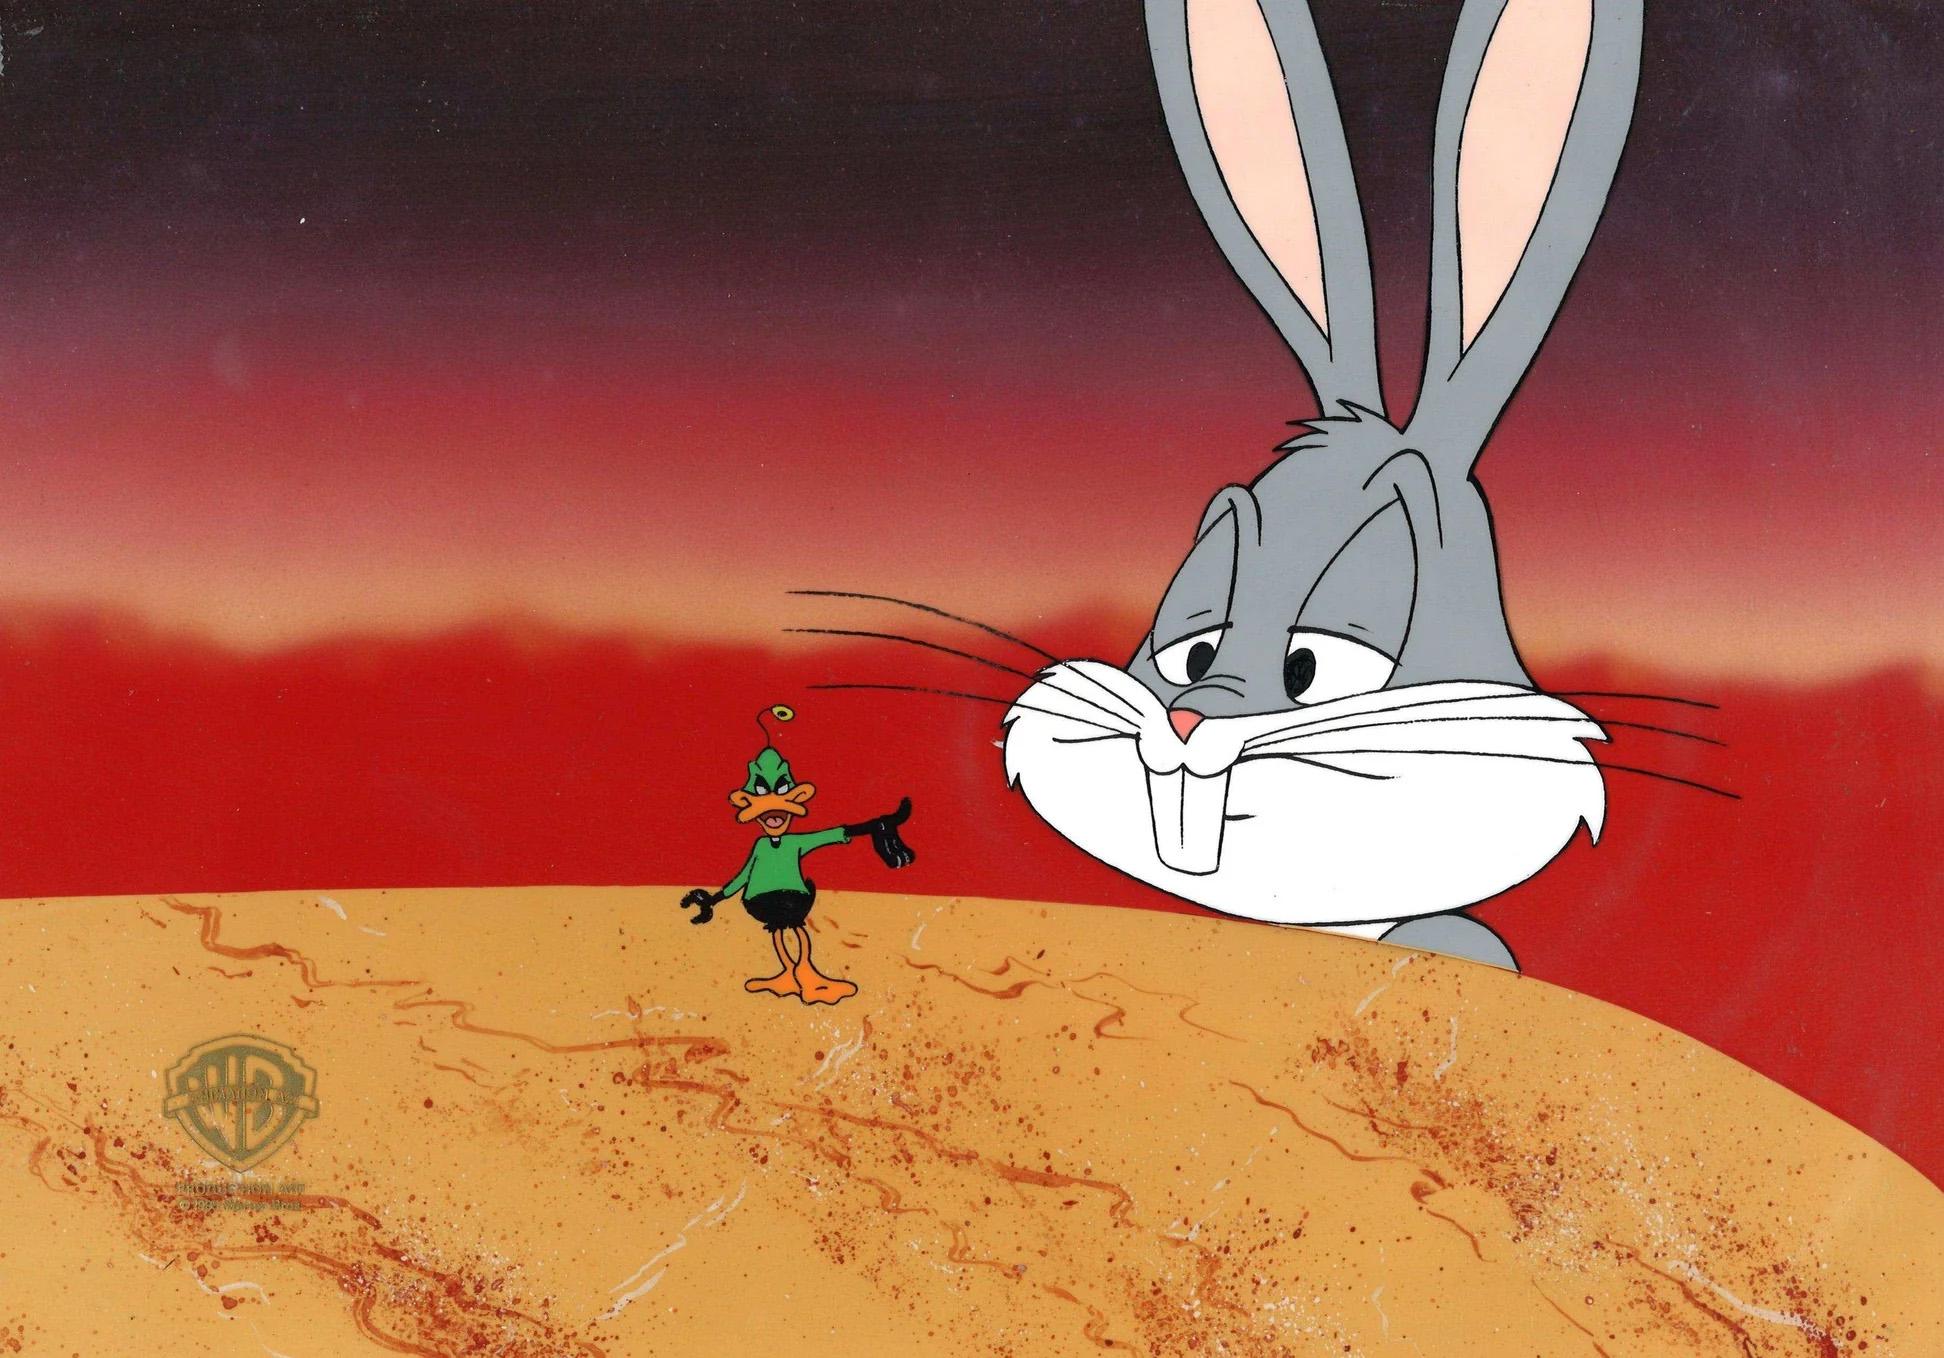 Looney Tunes Original Production Cel: Bugs Bunny and Duck Dodgers - Art by Warner Bros. Studio Artists